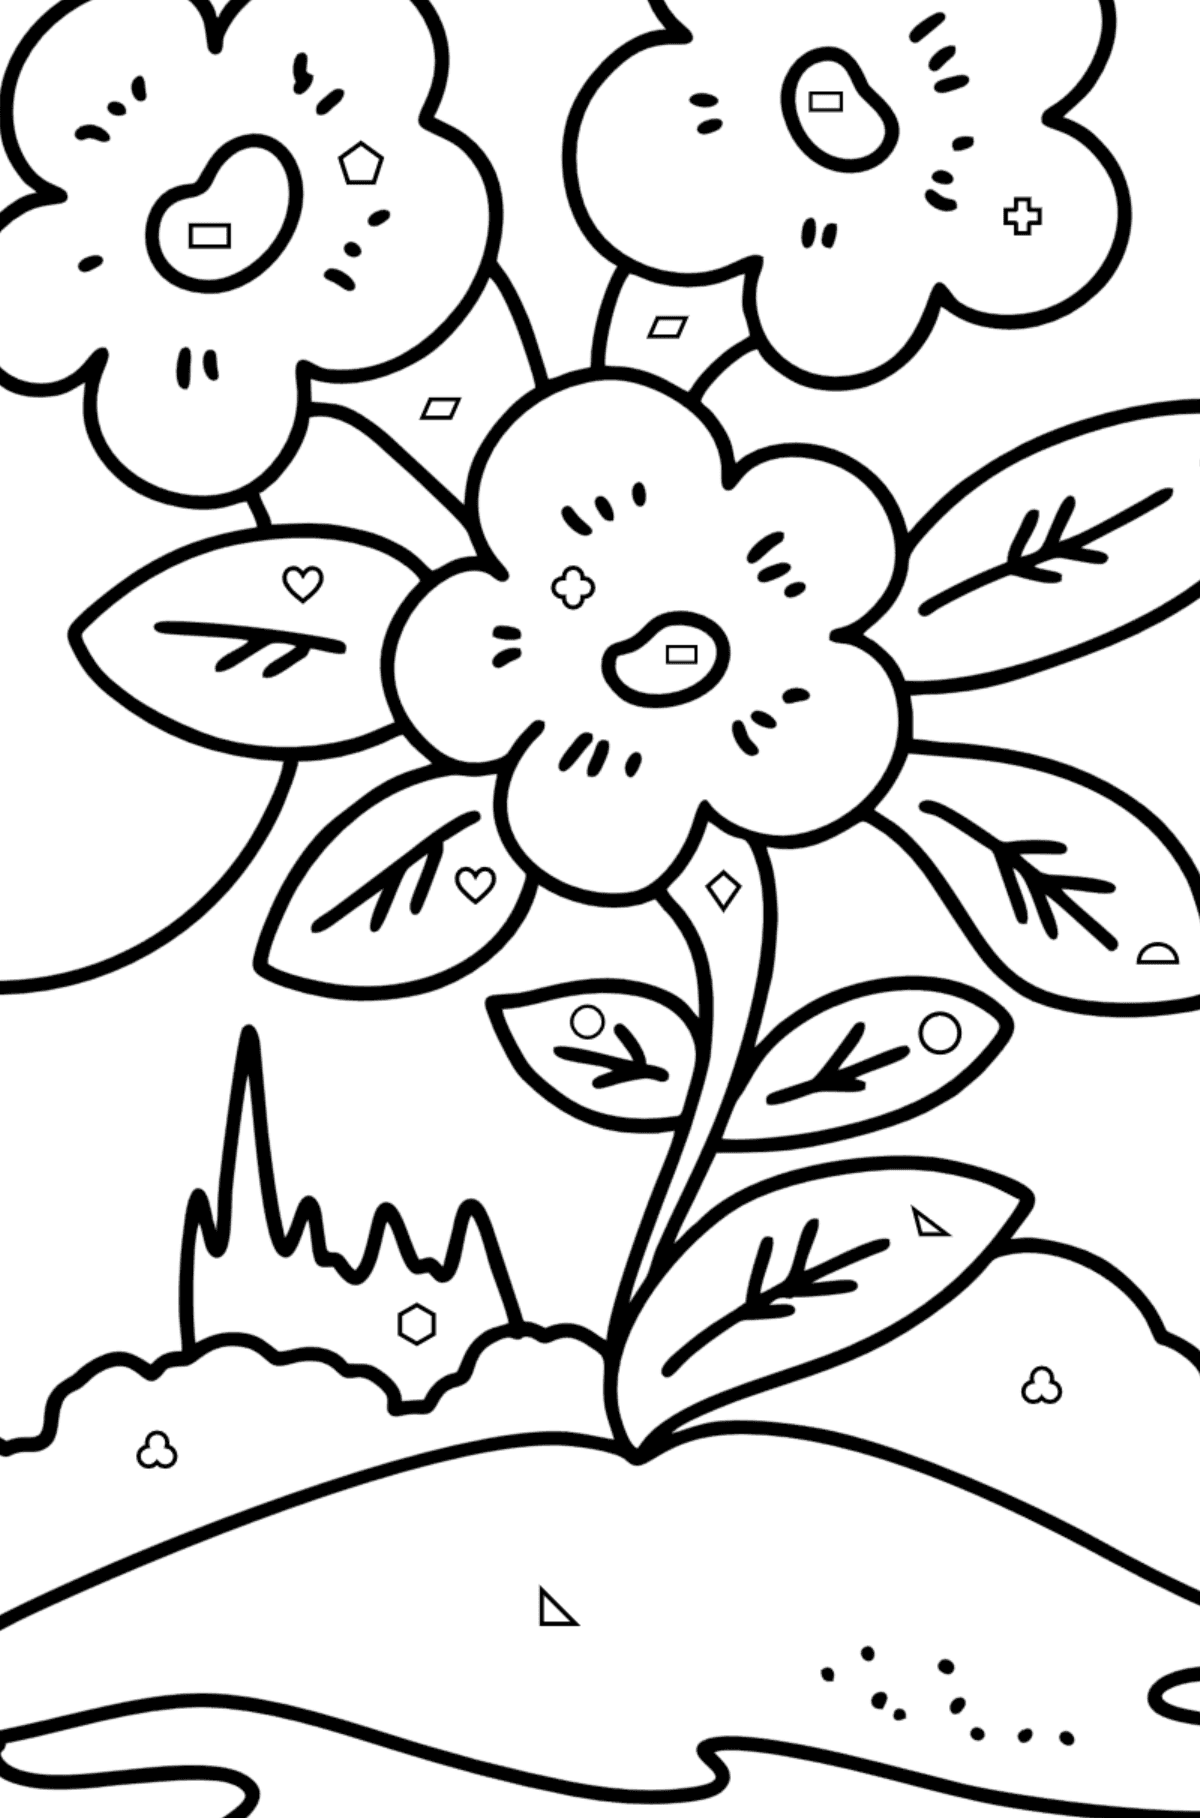 Mewarnai gambar bunga musim semi yang lucu - Pewarnaan mengikuti Bentuk Geometris untuk anak-anak